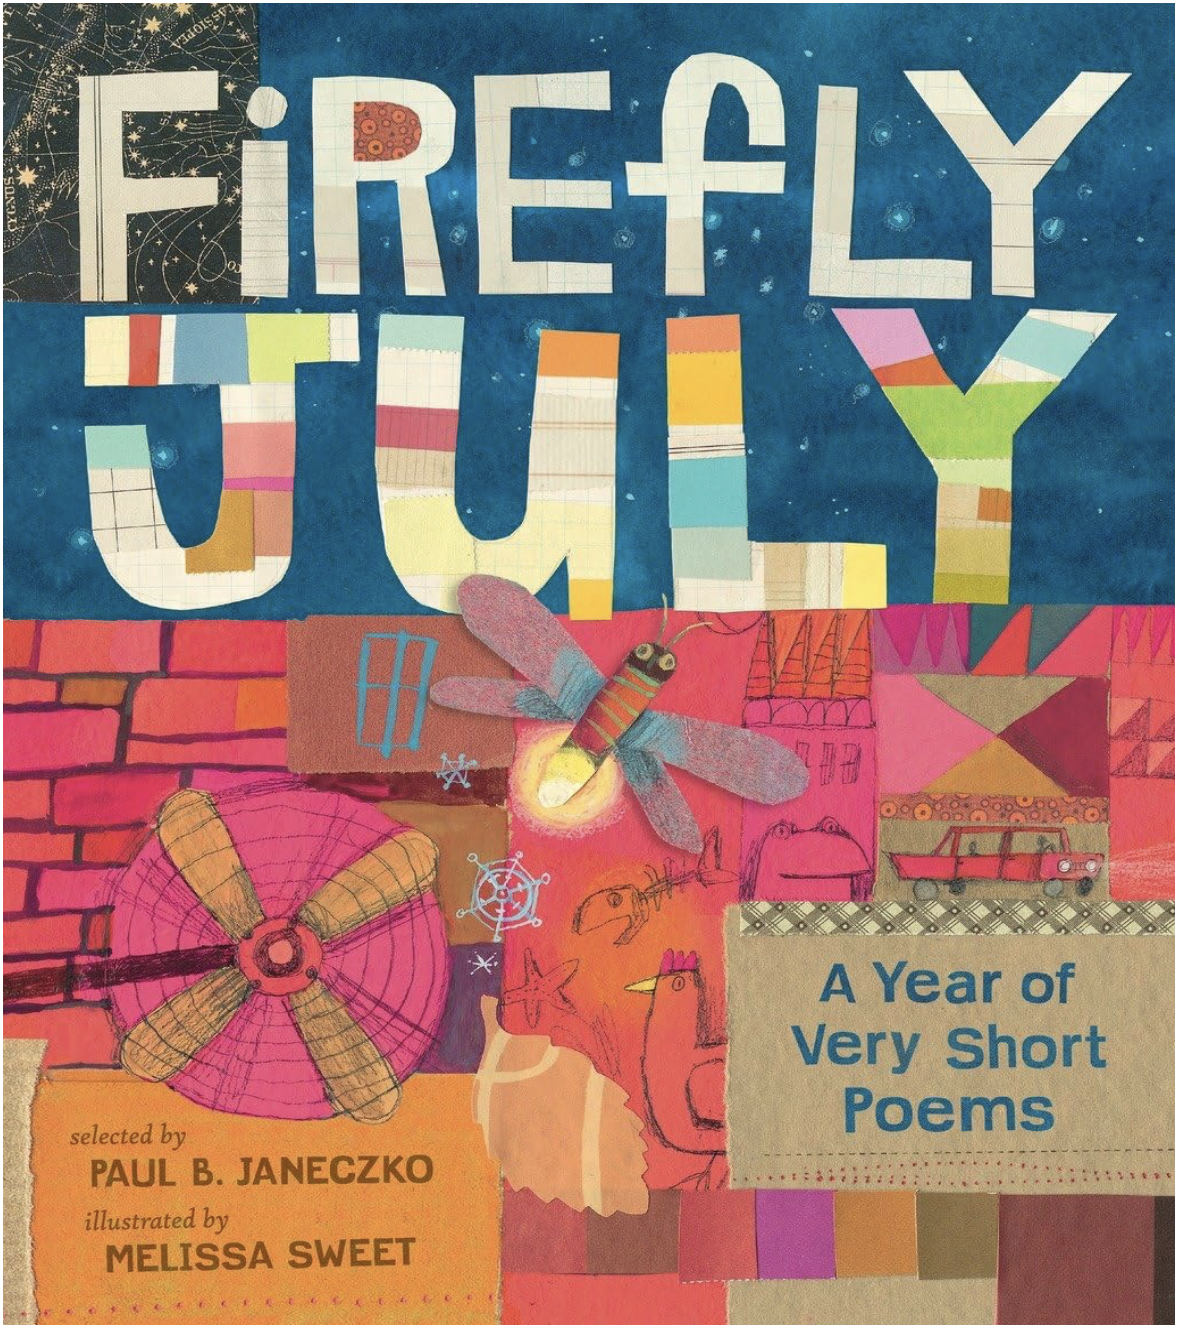 Firefly July